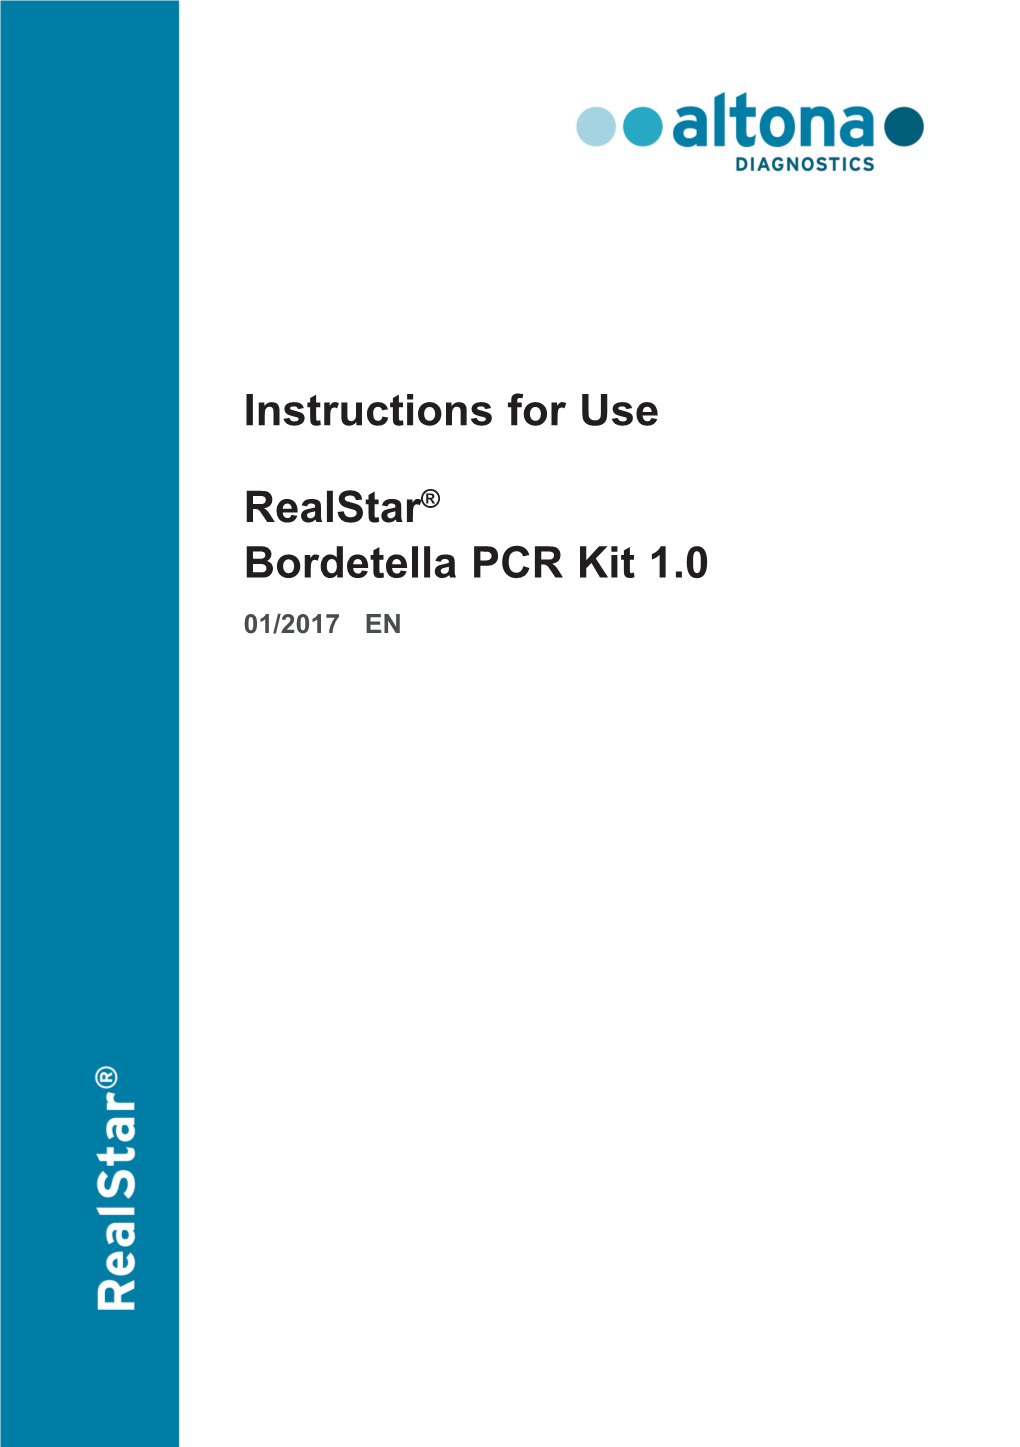 Instructions for Use Realstar® Bordetella PCR Kit